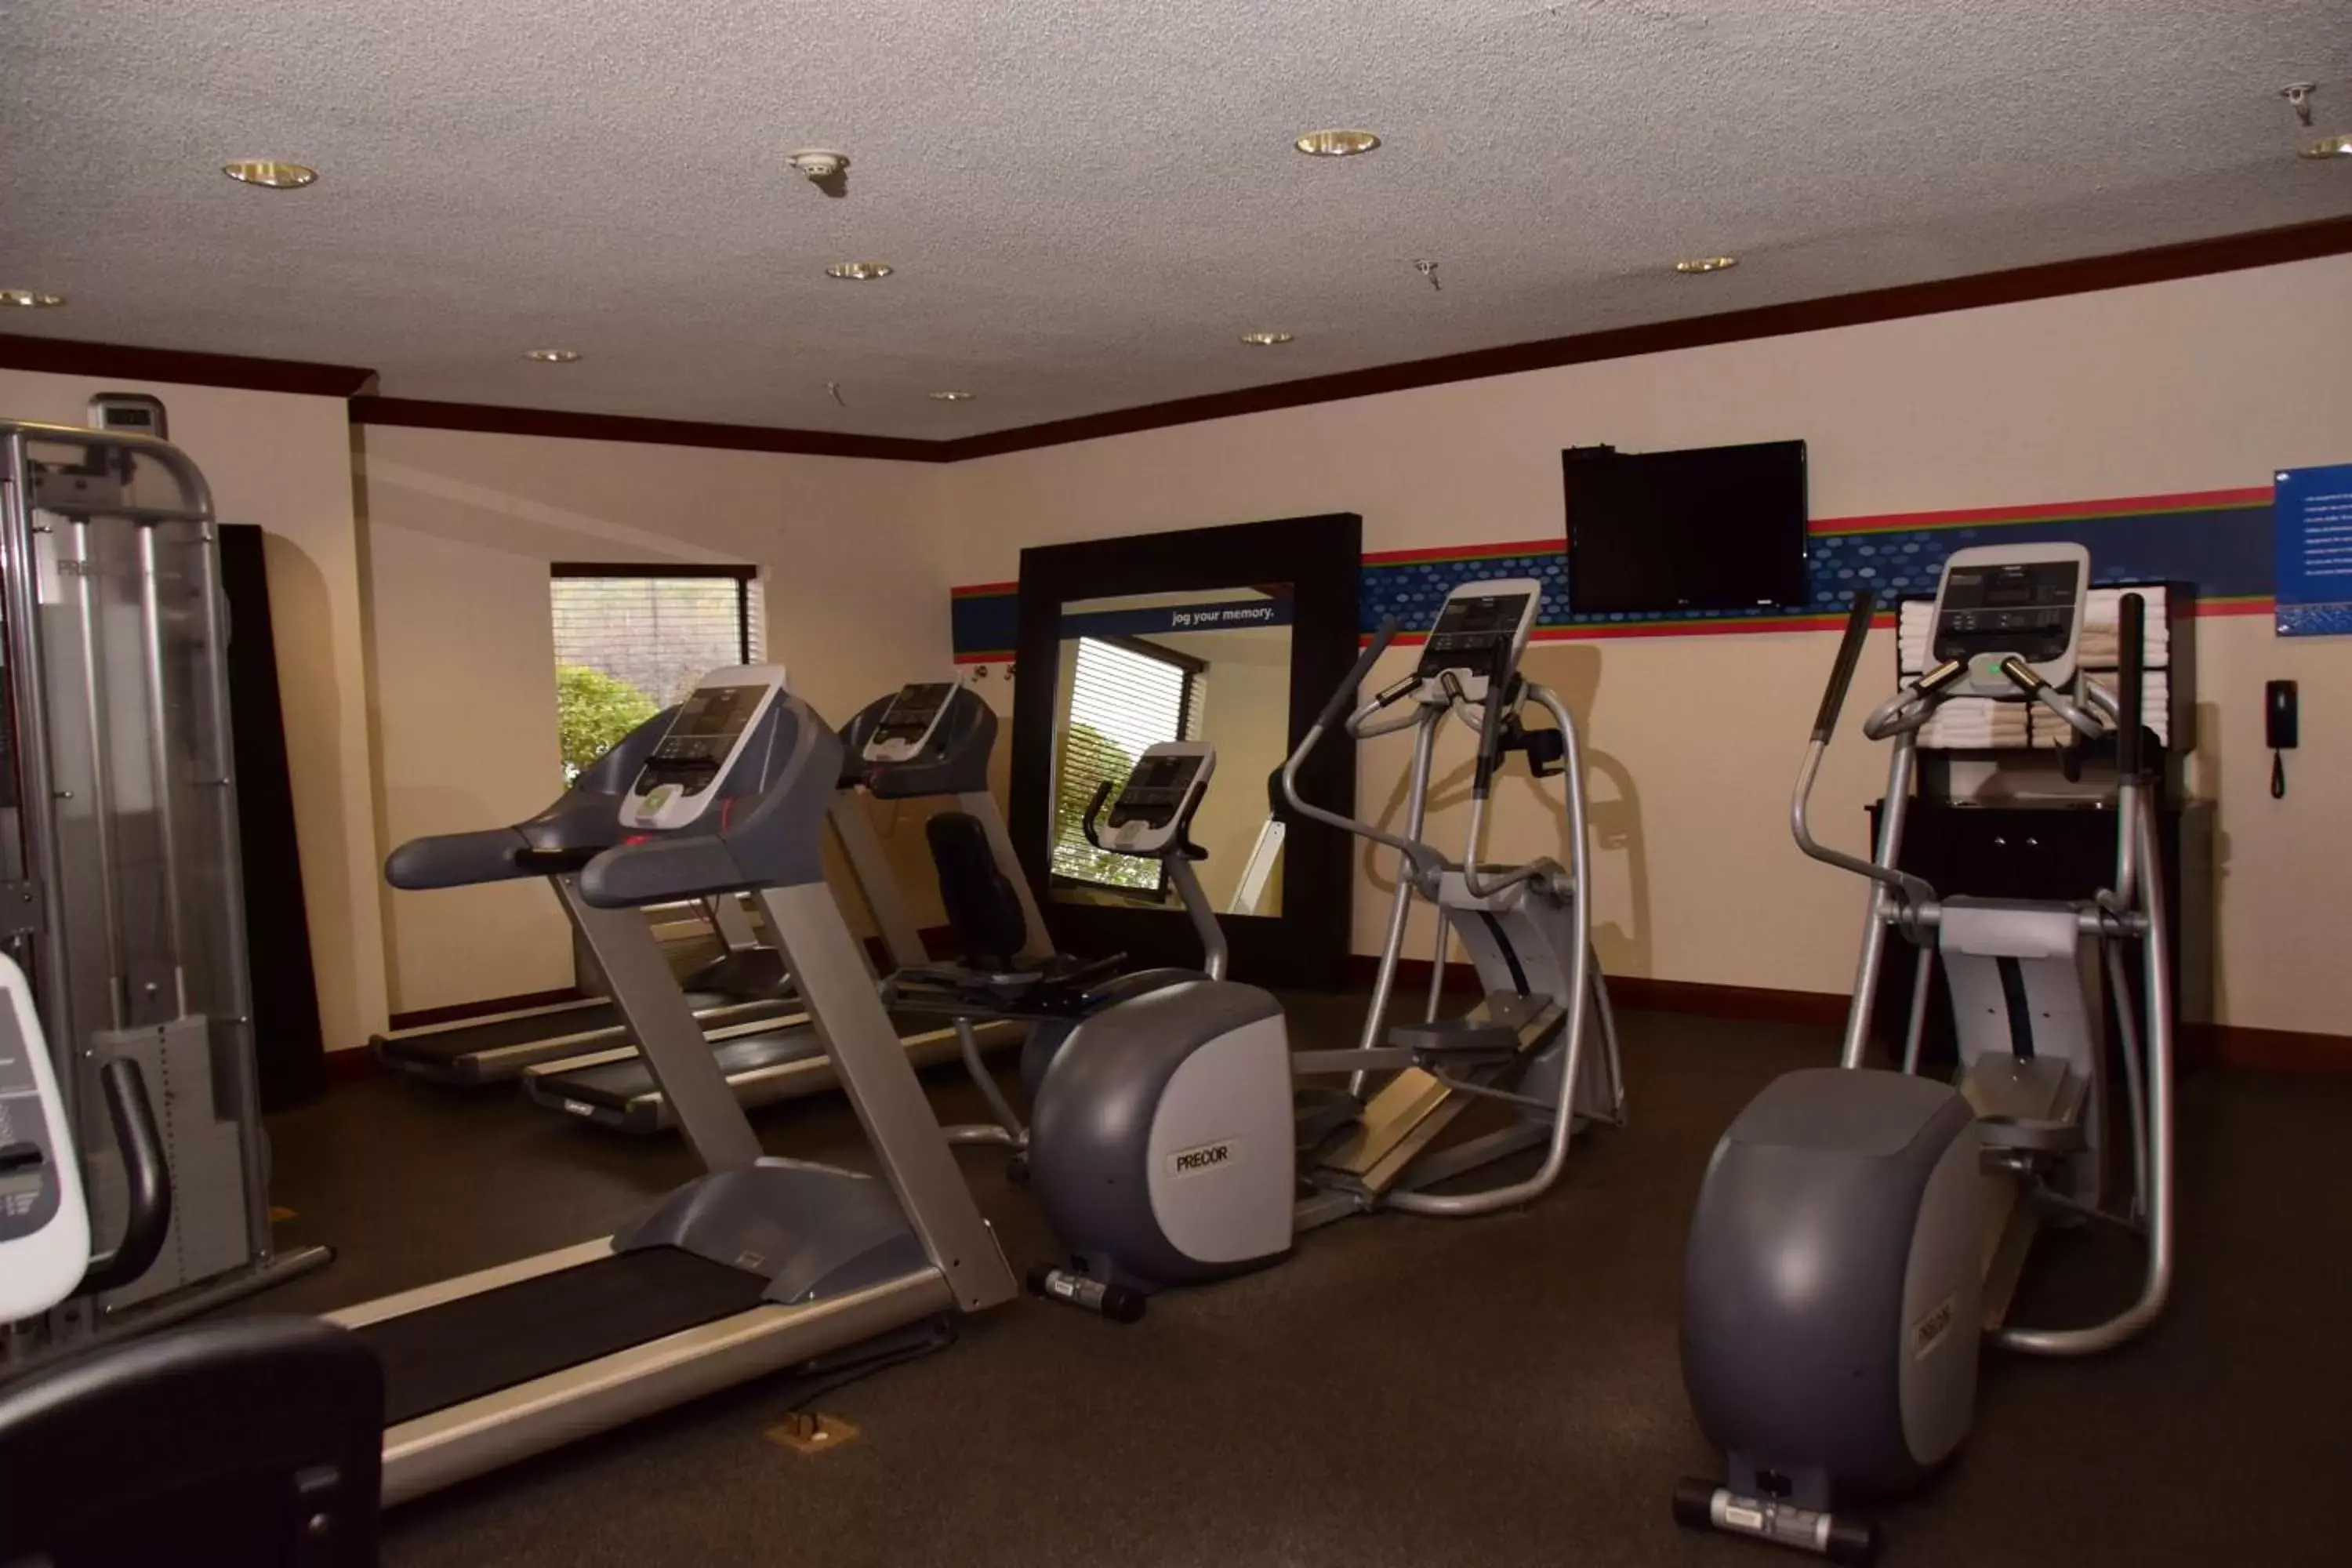 Fitness centre/facilities, Fitness Center/Facilities in Hampton Inn Indiana